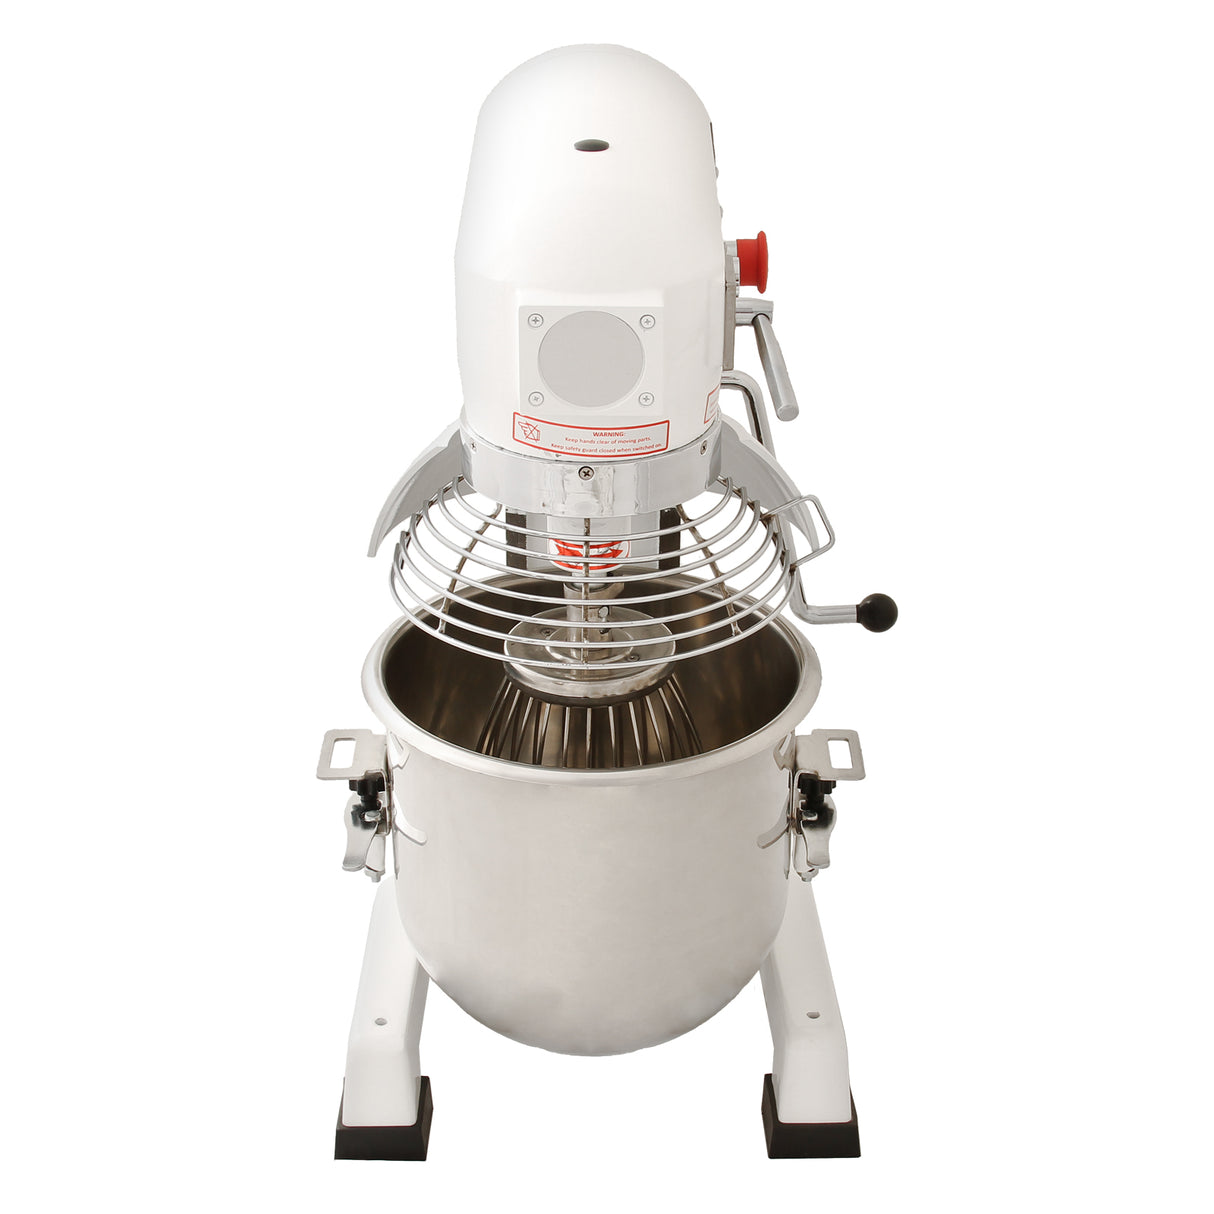 Robot de Cocina Multifunción KuKoo 15 Litros con Accesorios